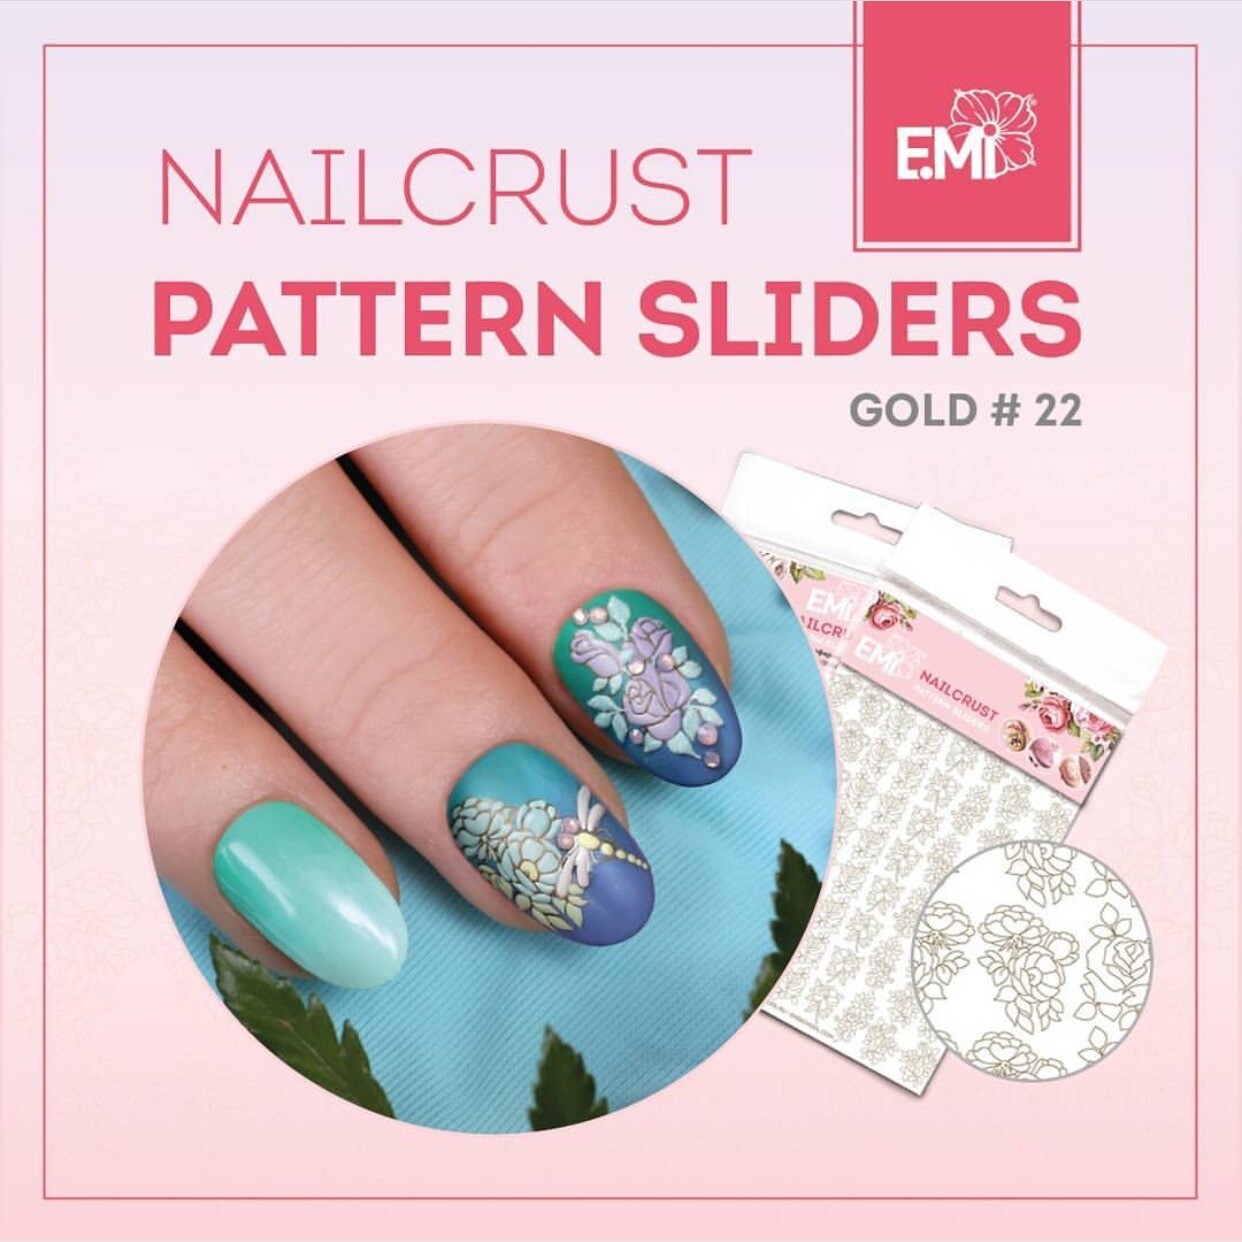 NAILCRUST Pattern Sliders Gold #22